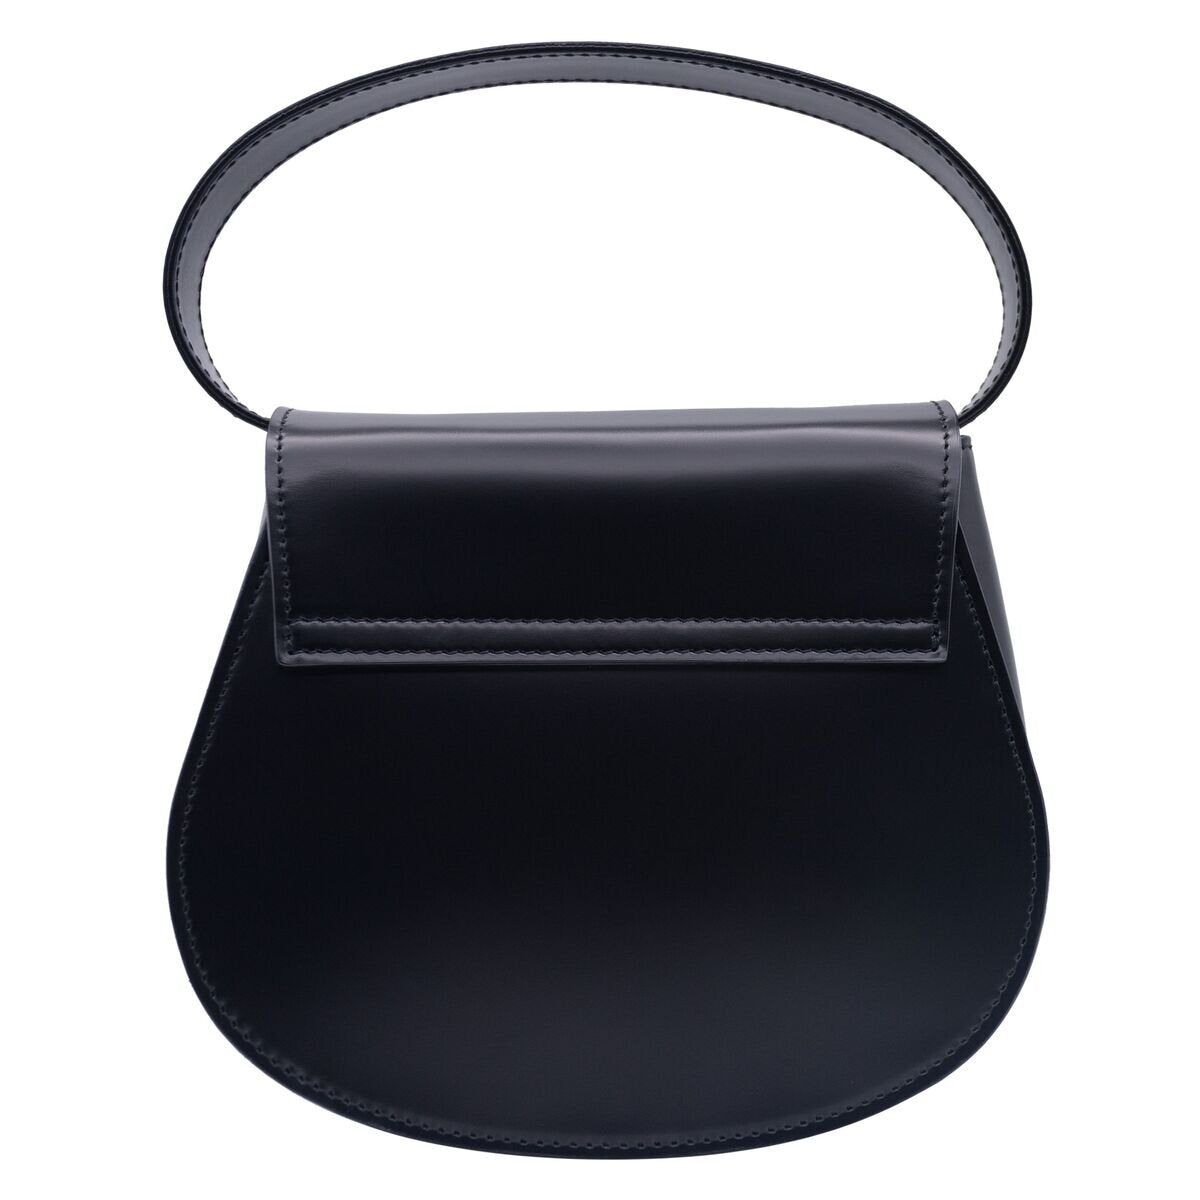 Top-handle saddle handbag in black